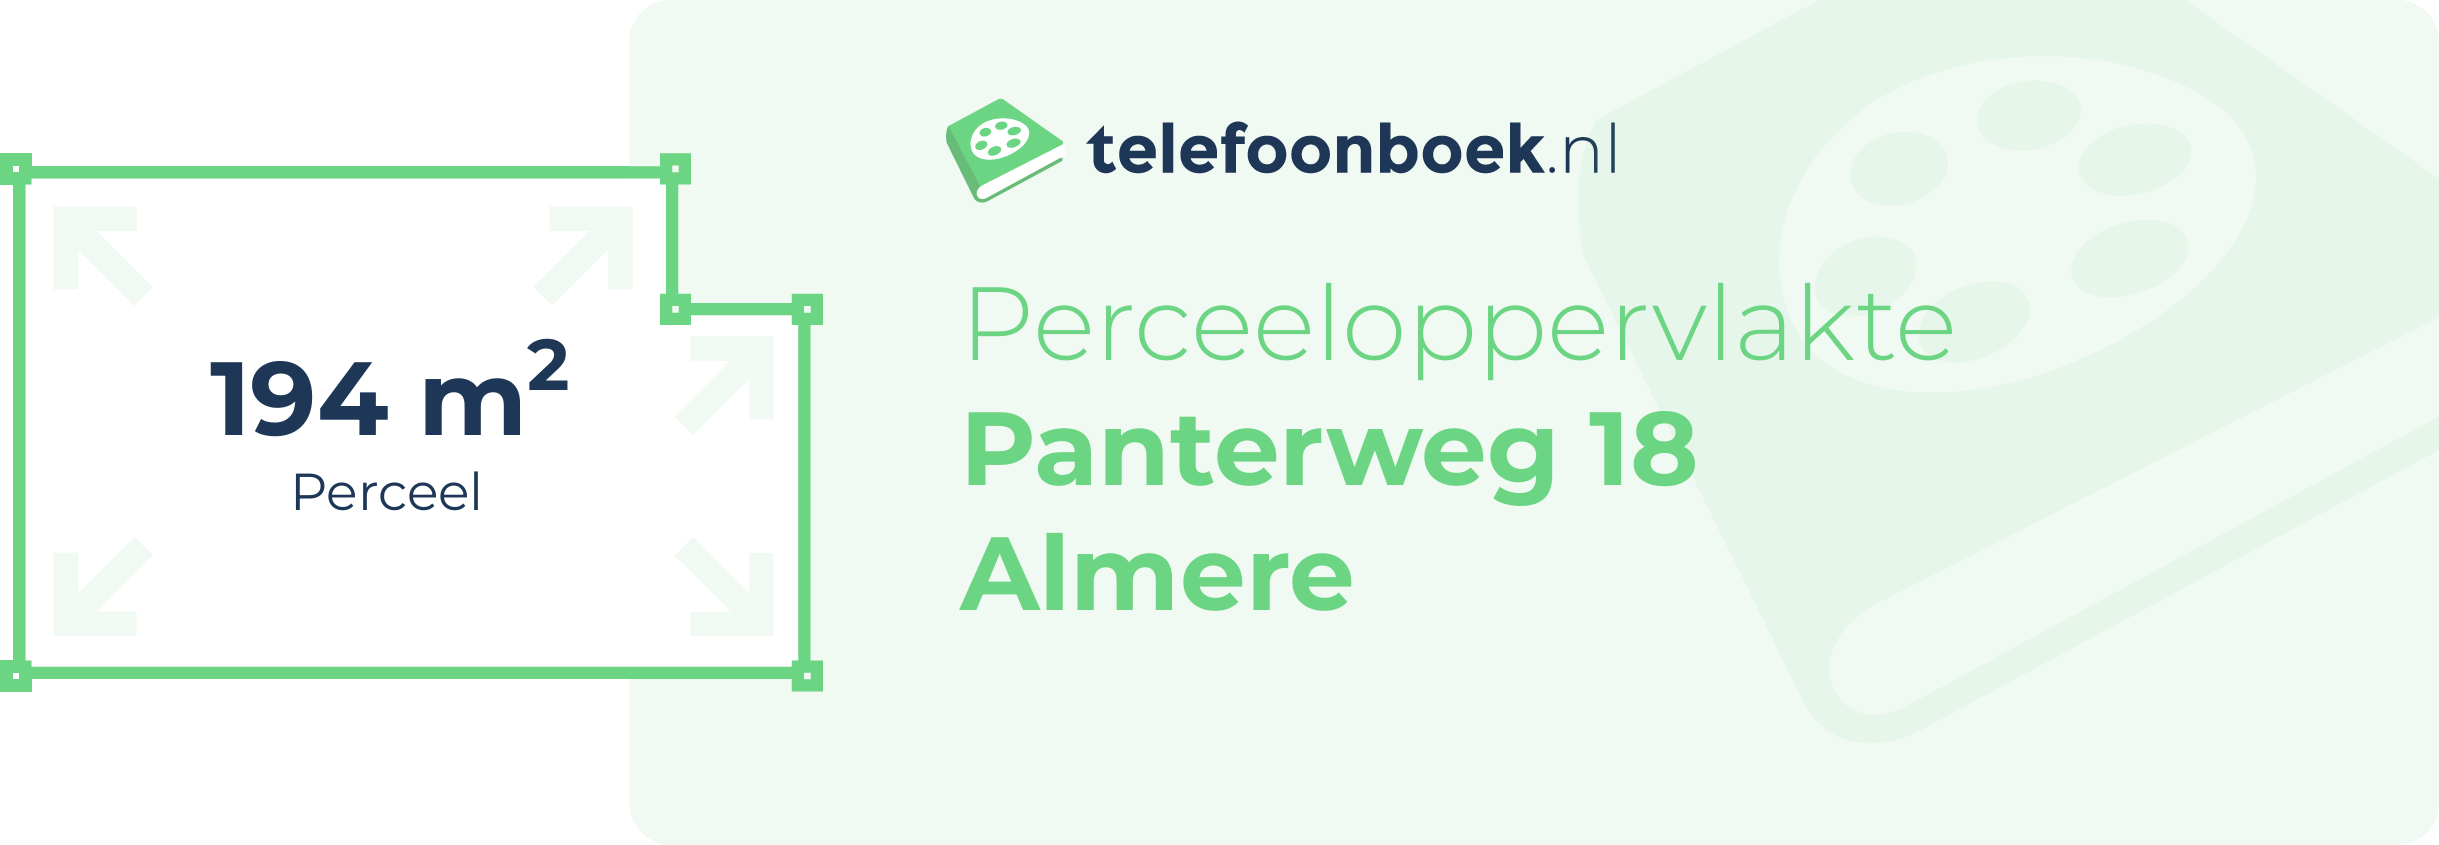 Perceeloppervlakte Panterweg 18 Almere